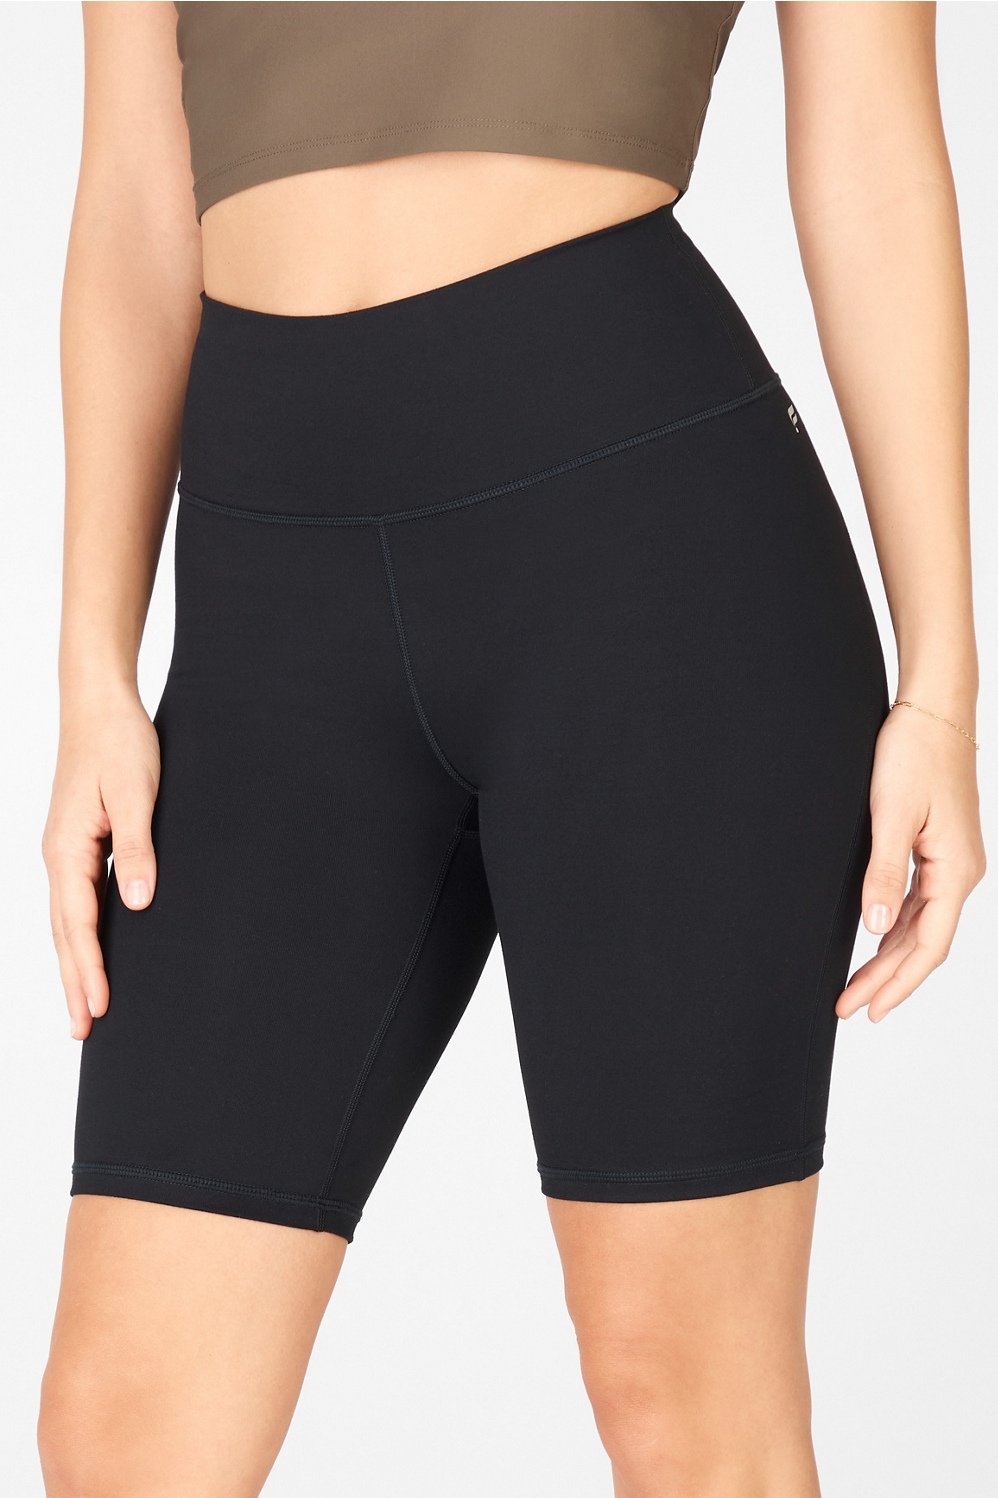 Black Fabletics Powerhold Leggings XL  Clothes design, Gym shorts womens,  Fabletics